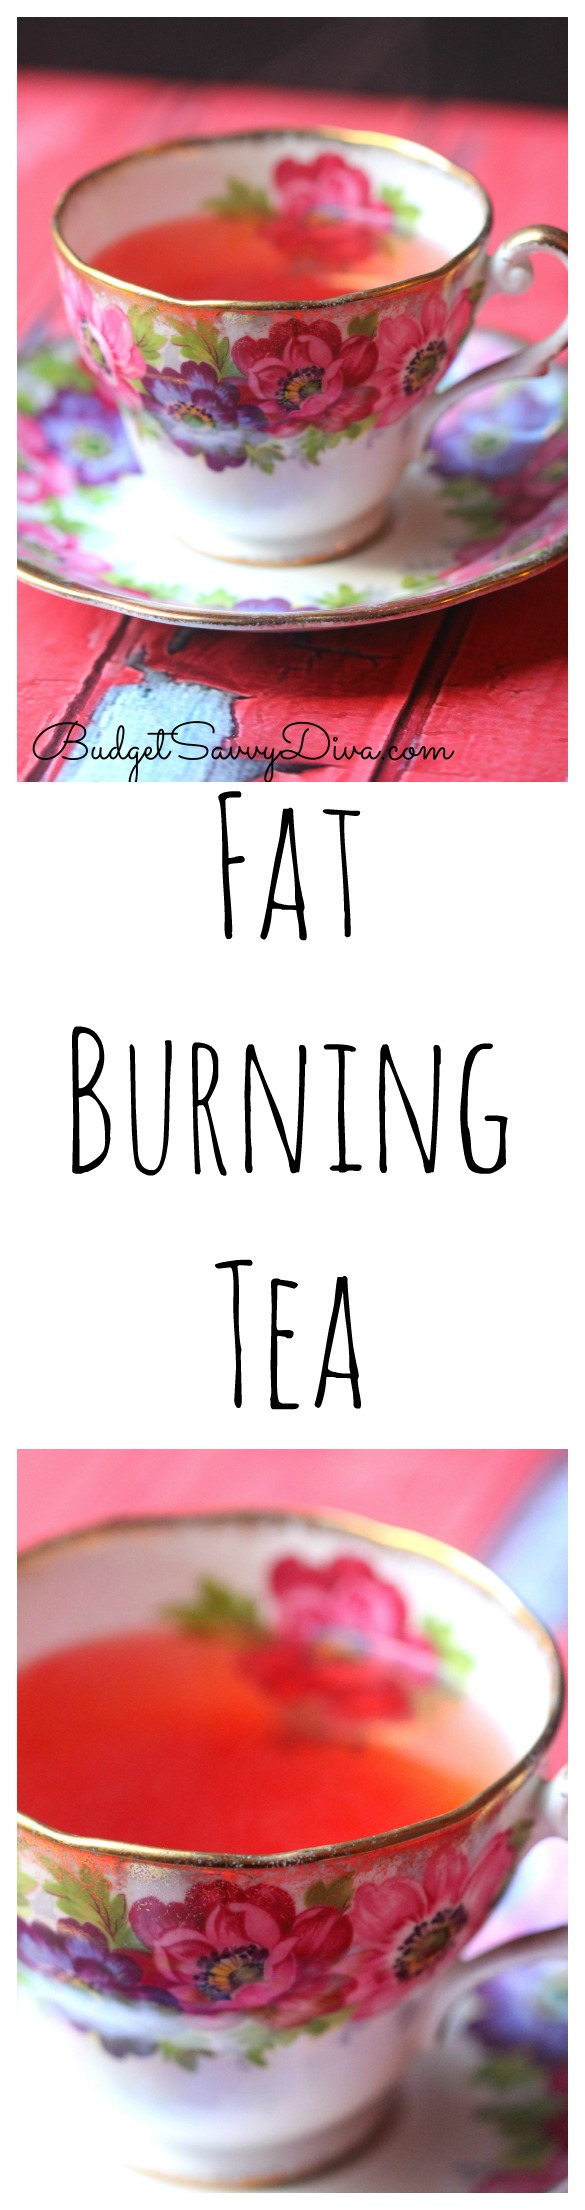 Fat Burning Tea Recipe 